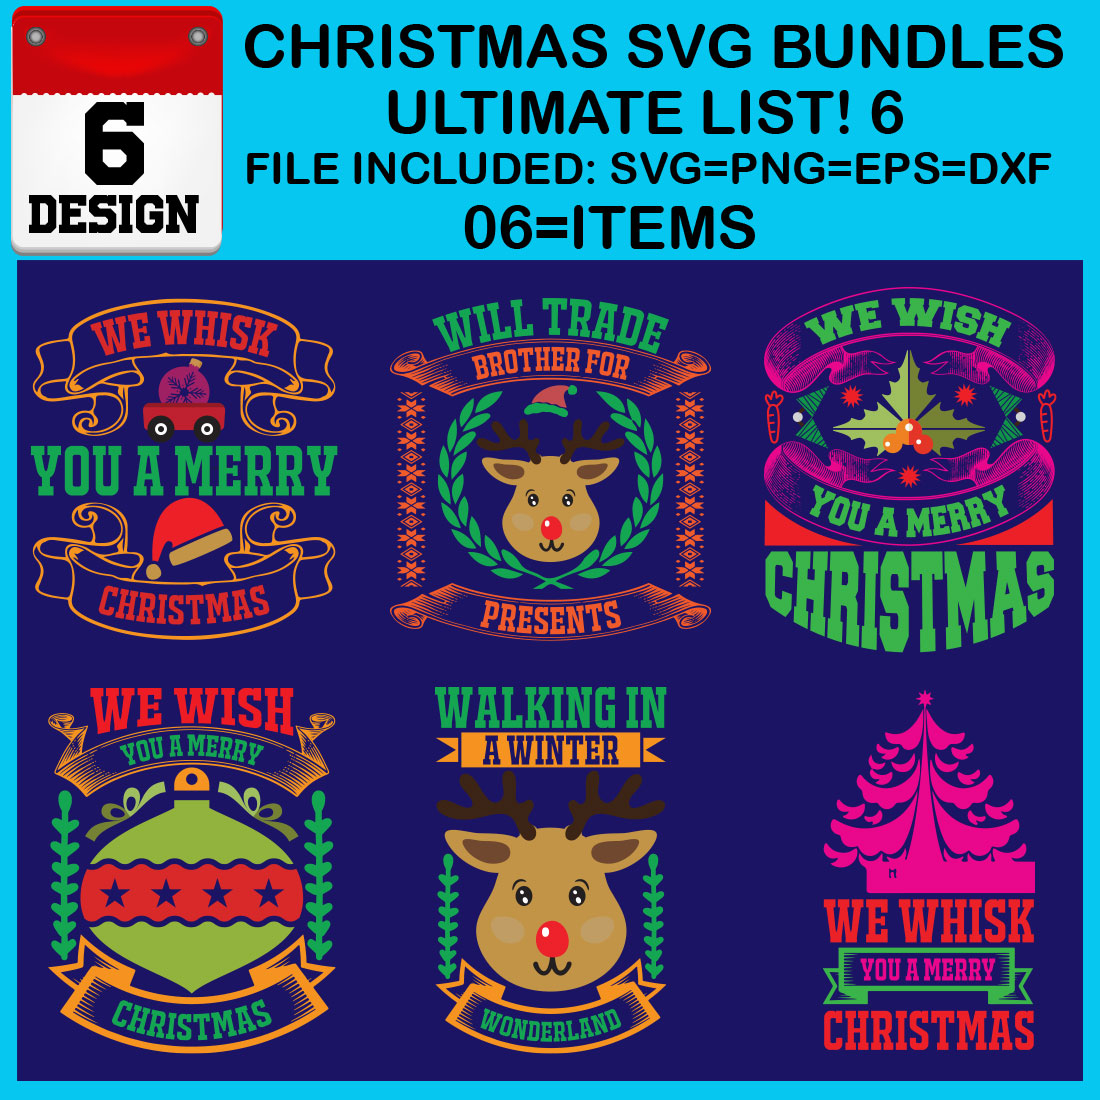 Ultimate List! 6 Christmas SVG Free Bundles cover image.